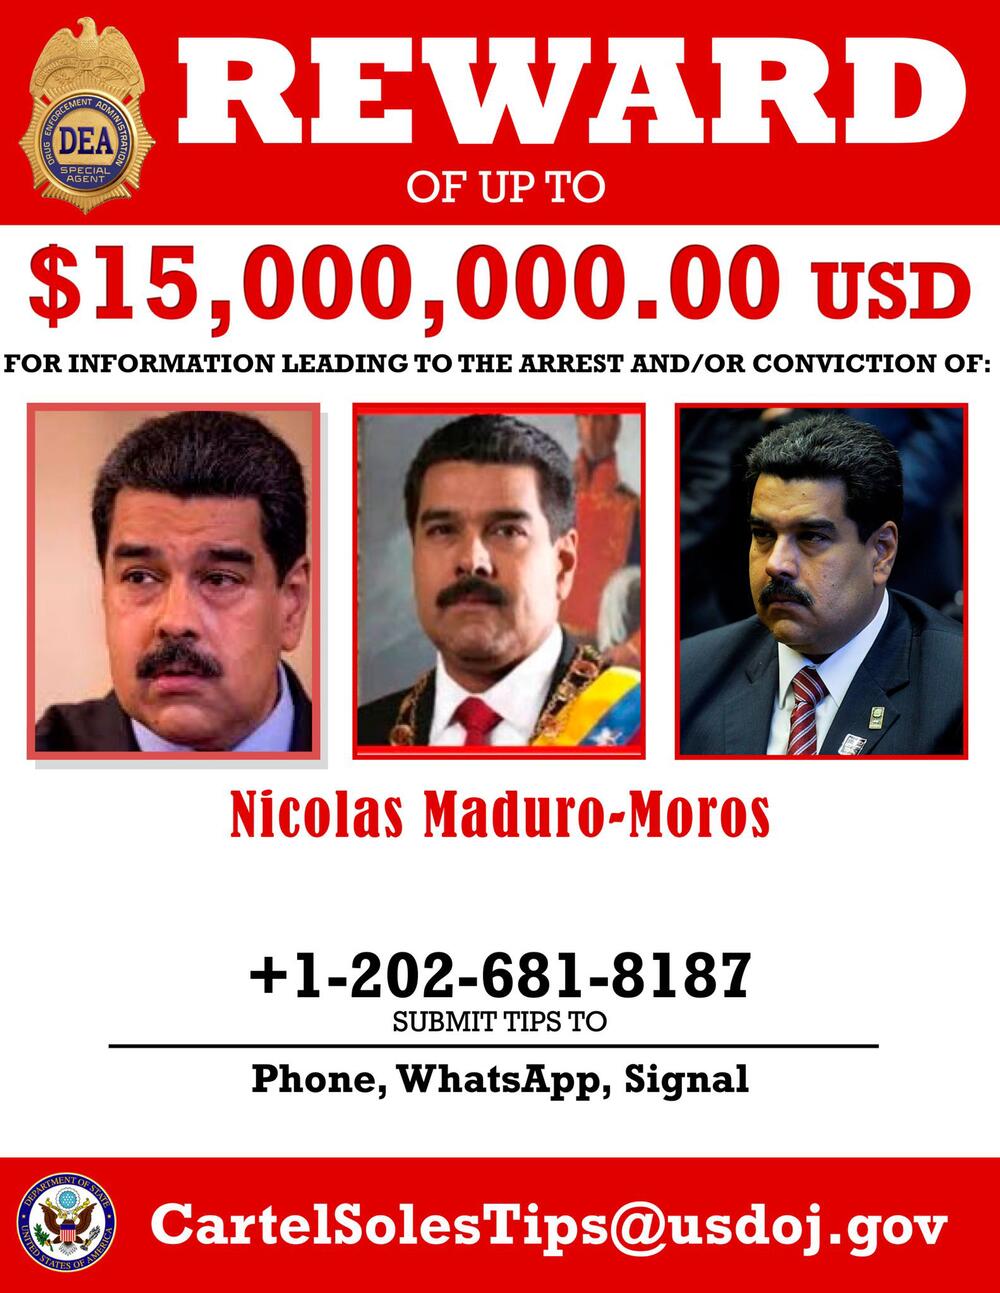 USA klagen Venezuelas Präsidenten Maduro wegen Drogenhandels an